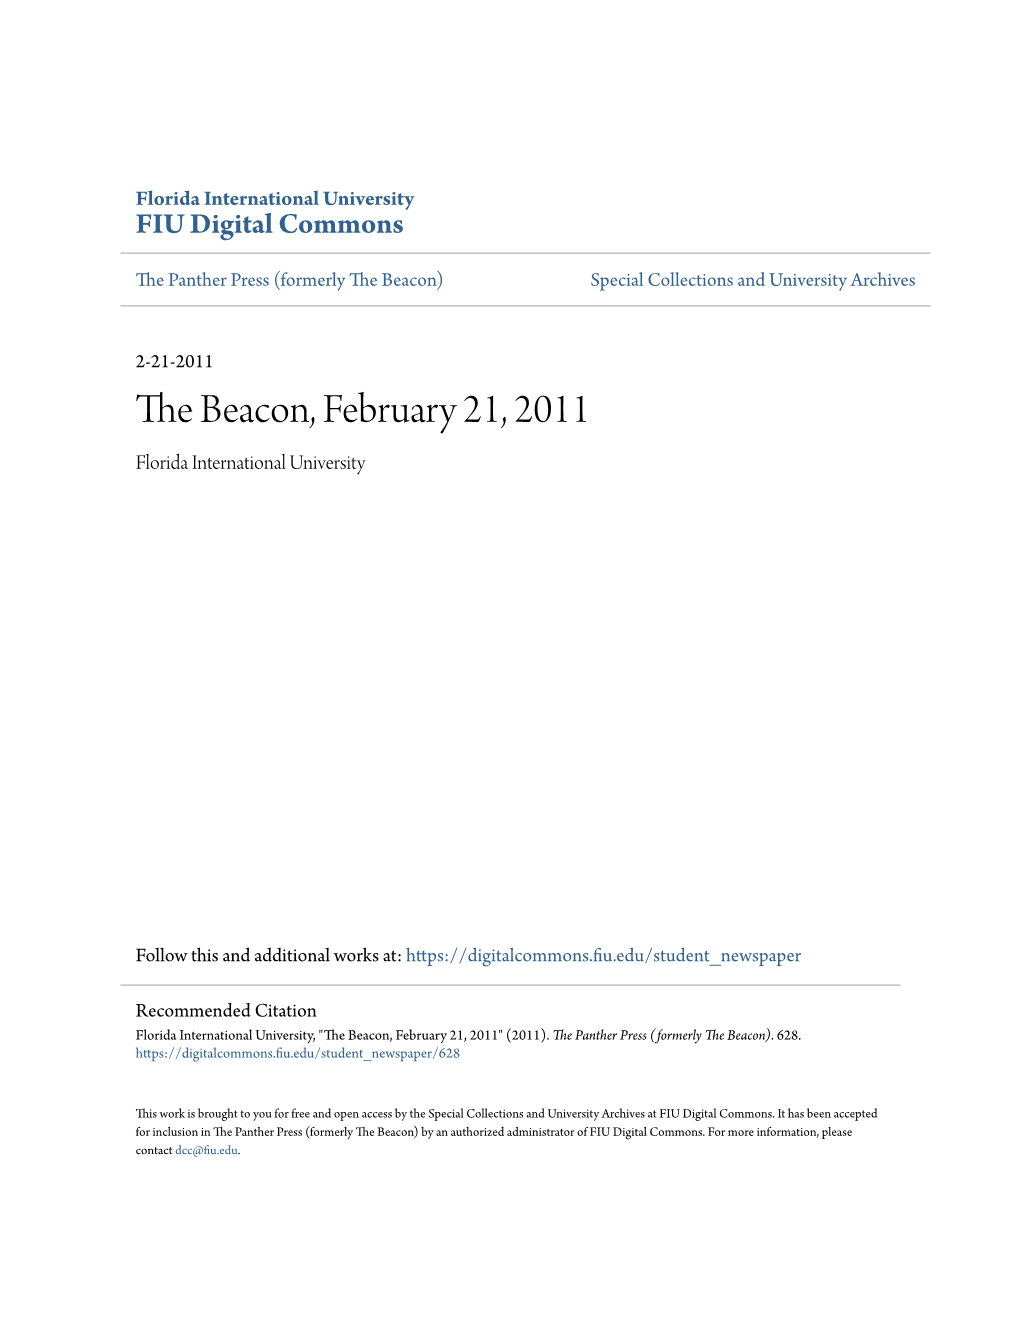 The Beacon, February 21, 2011 Florida International University